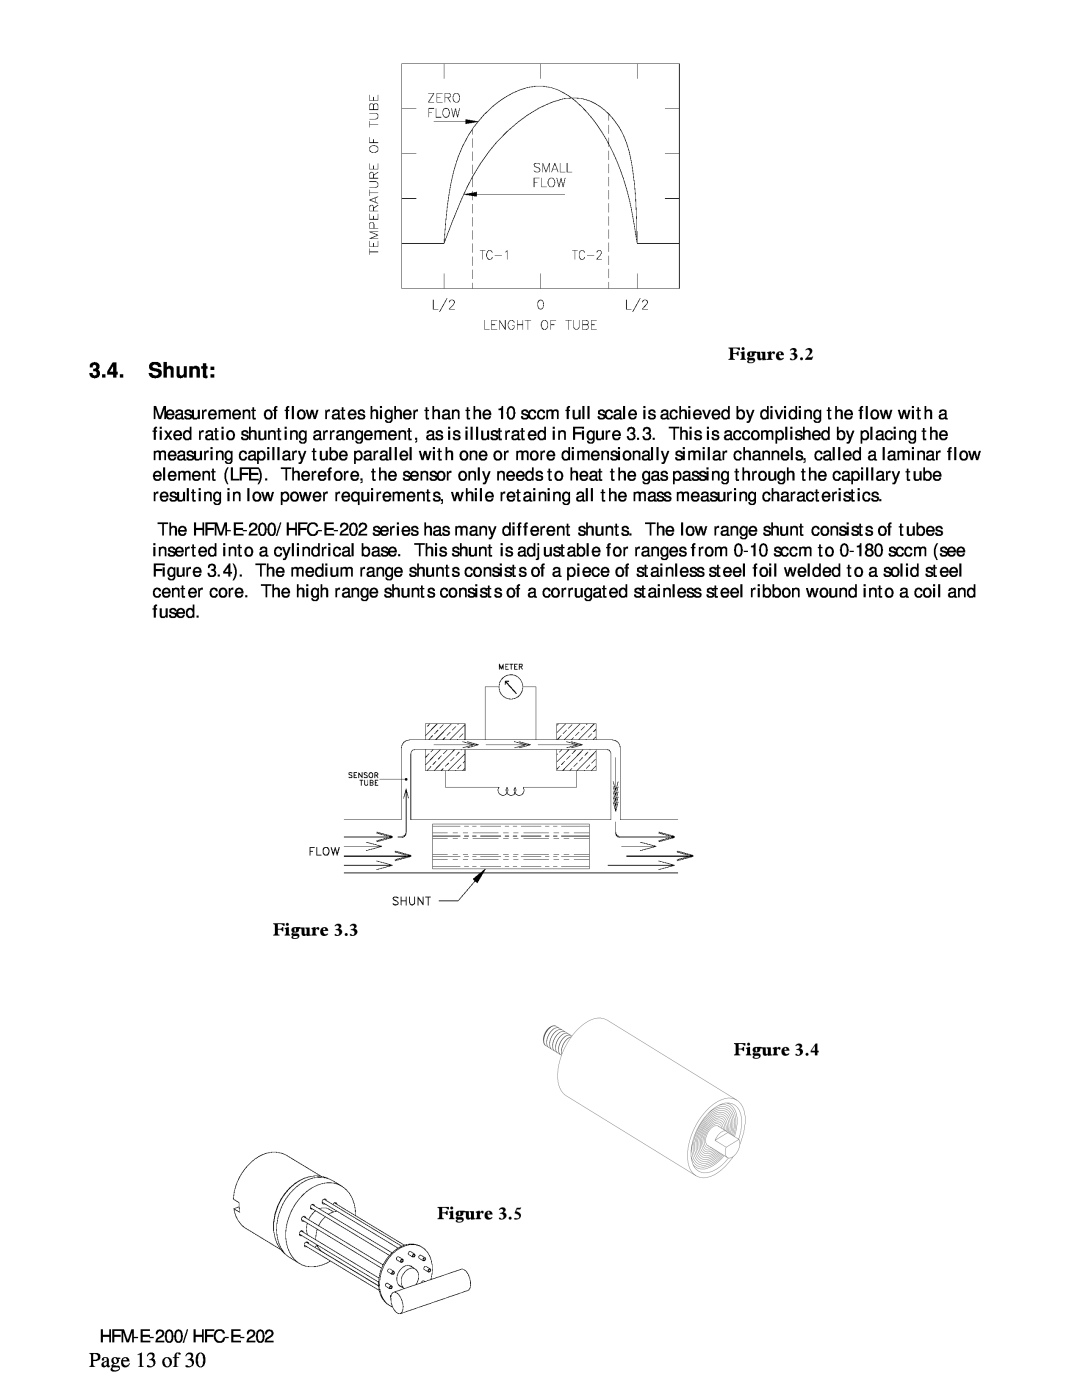 Teledyne HFM-E-200, HFC-E-202 instruction manual Shunt, Page 13 of 